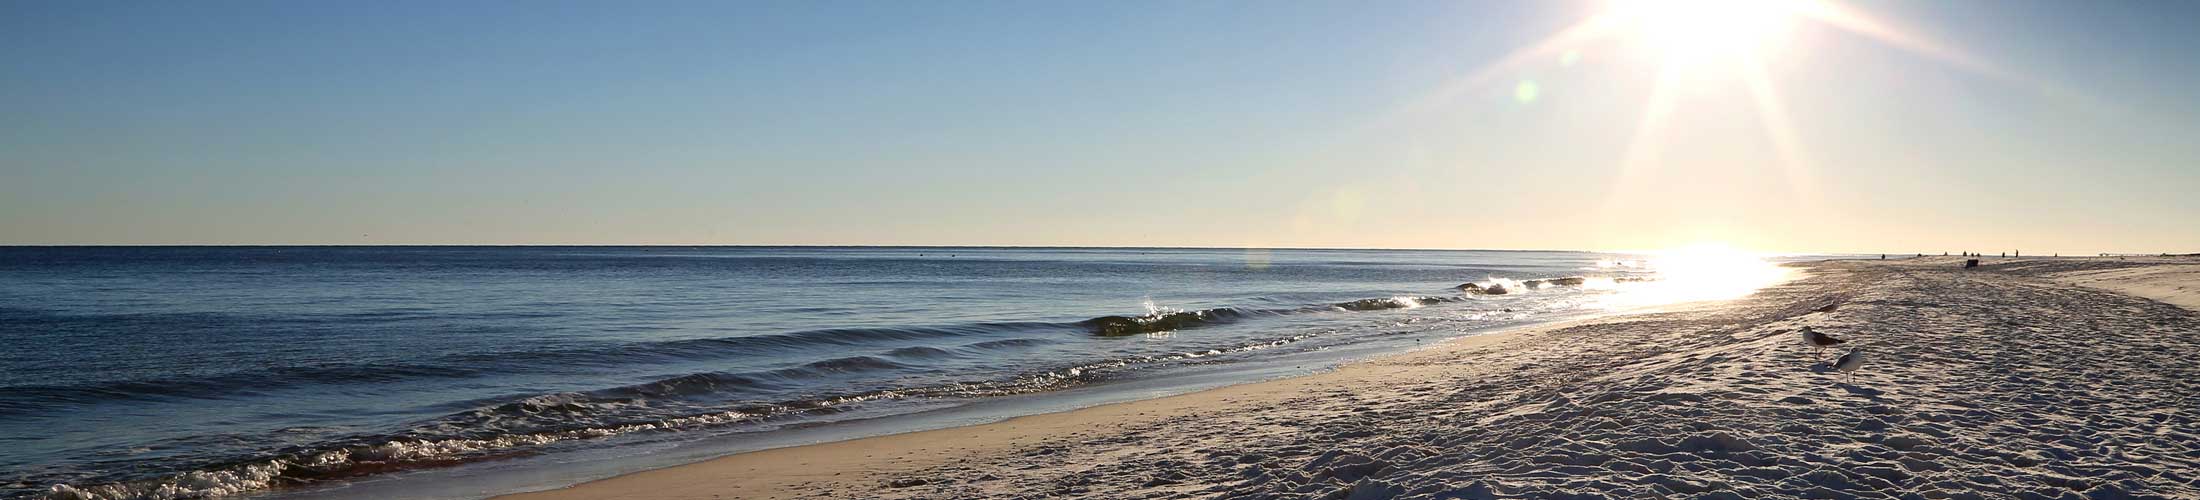 USA Gulf Coast Beach.